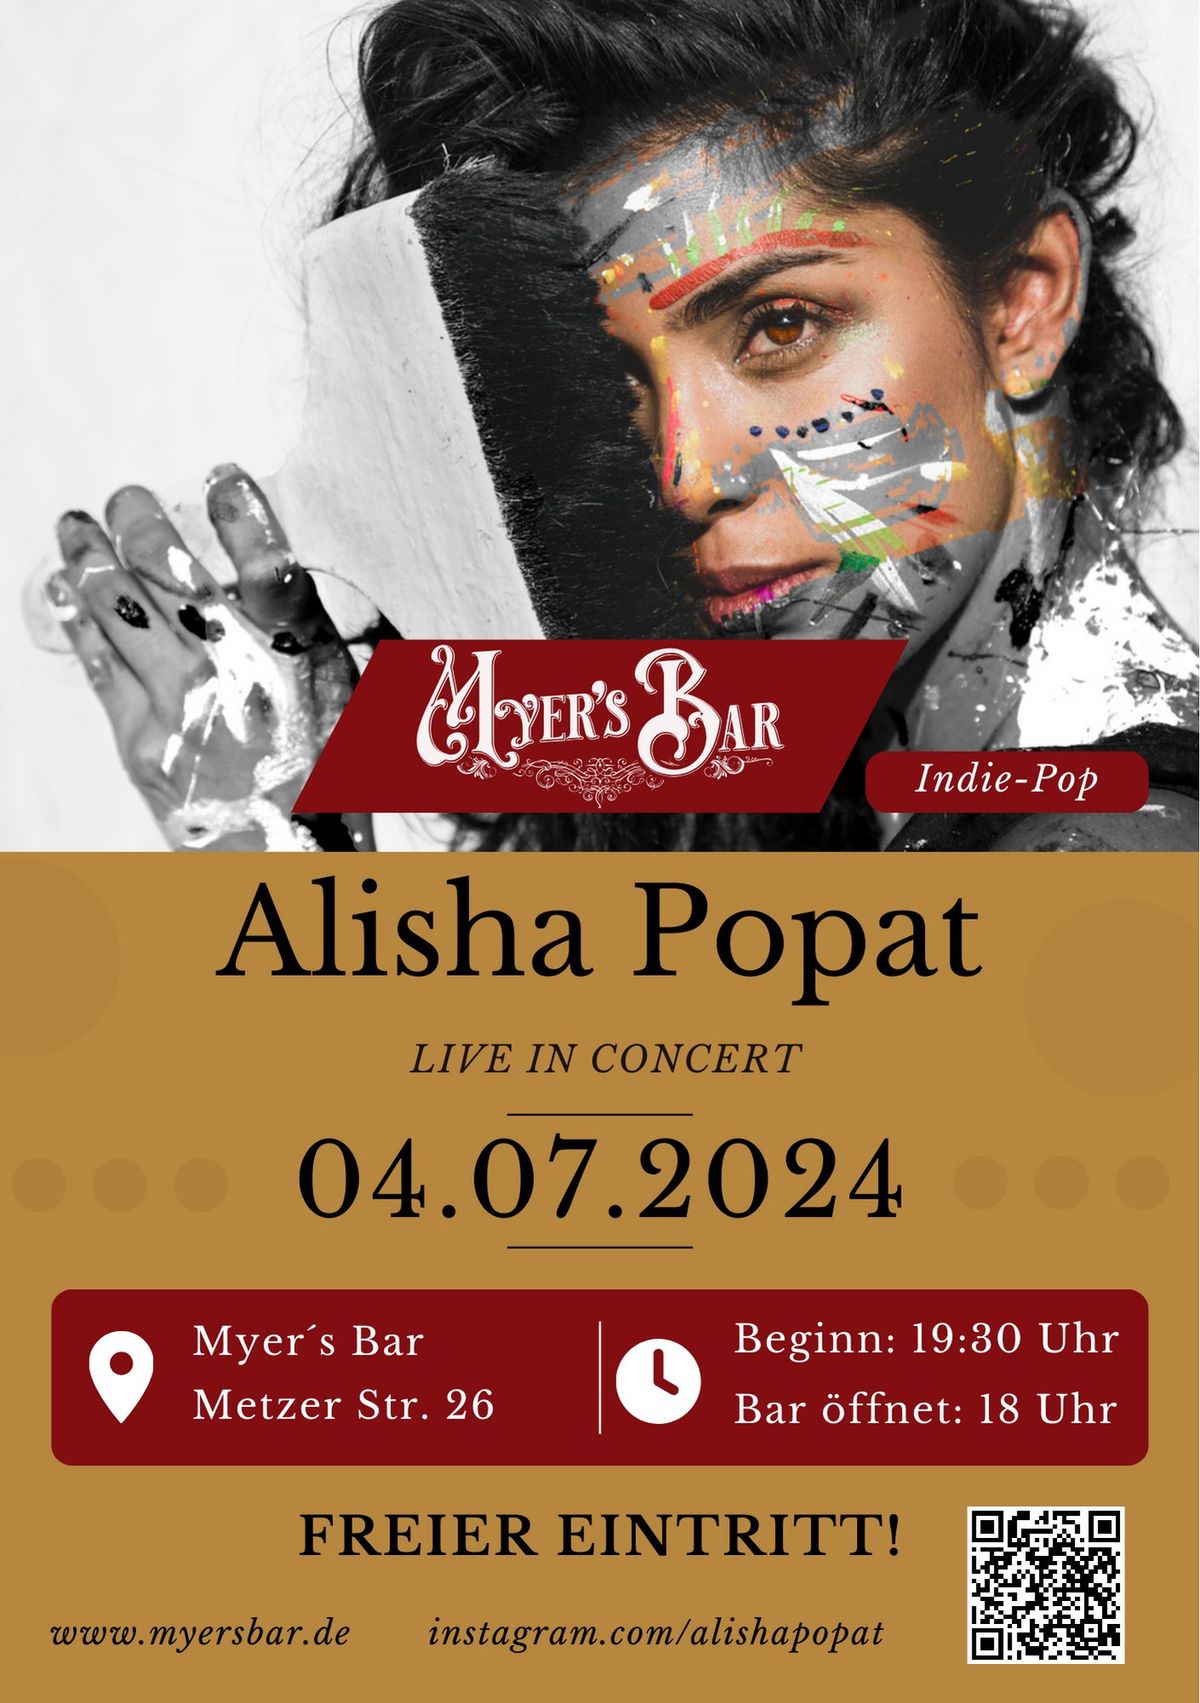 Alisha Popat live @ Myer's Bar Berlin